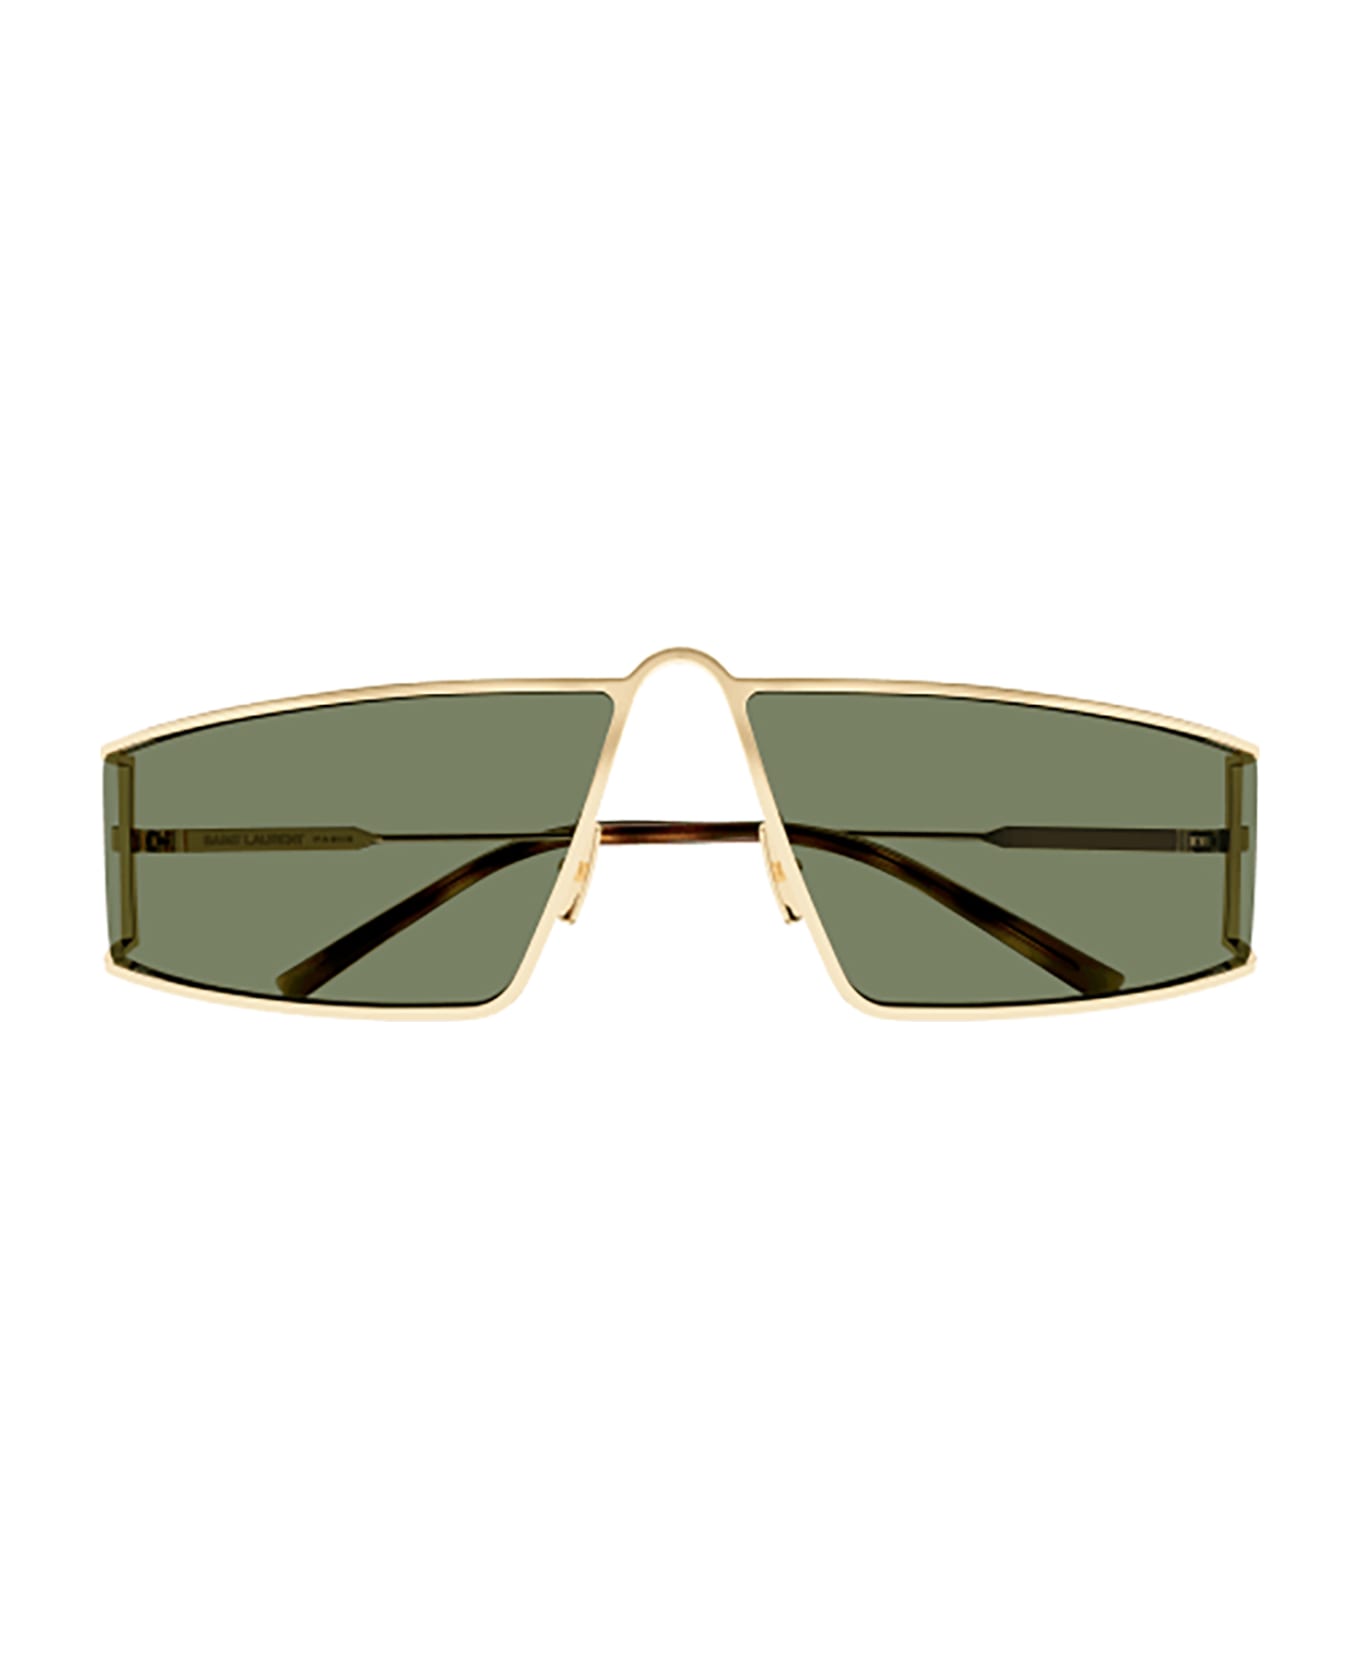 Saint Laurent Eyewear SL 606 Sunglasses - Gold Gold Green